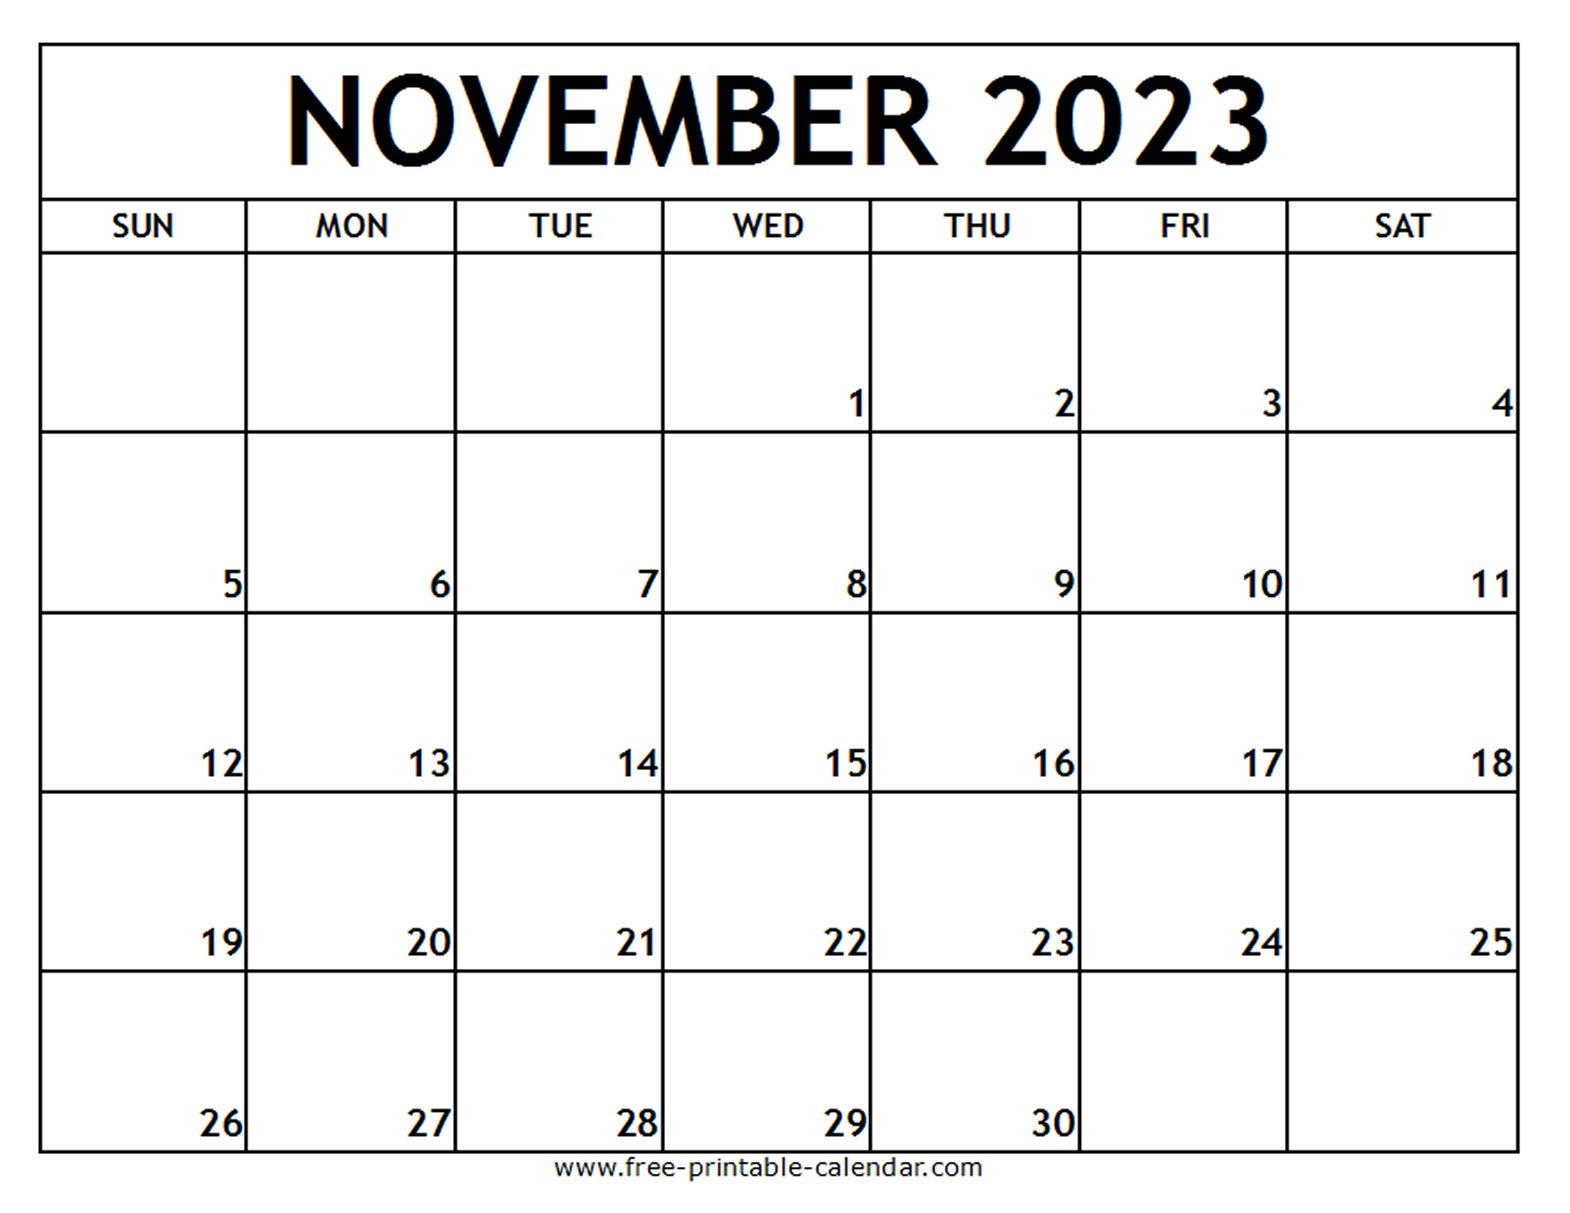 calendar-2023-printable-free-monthly-november-get-calendar-2023-update